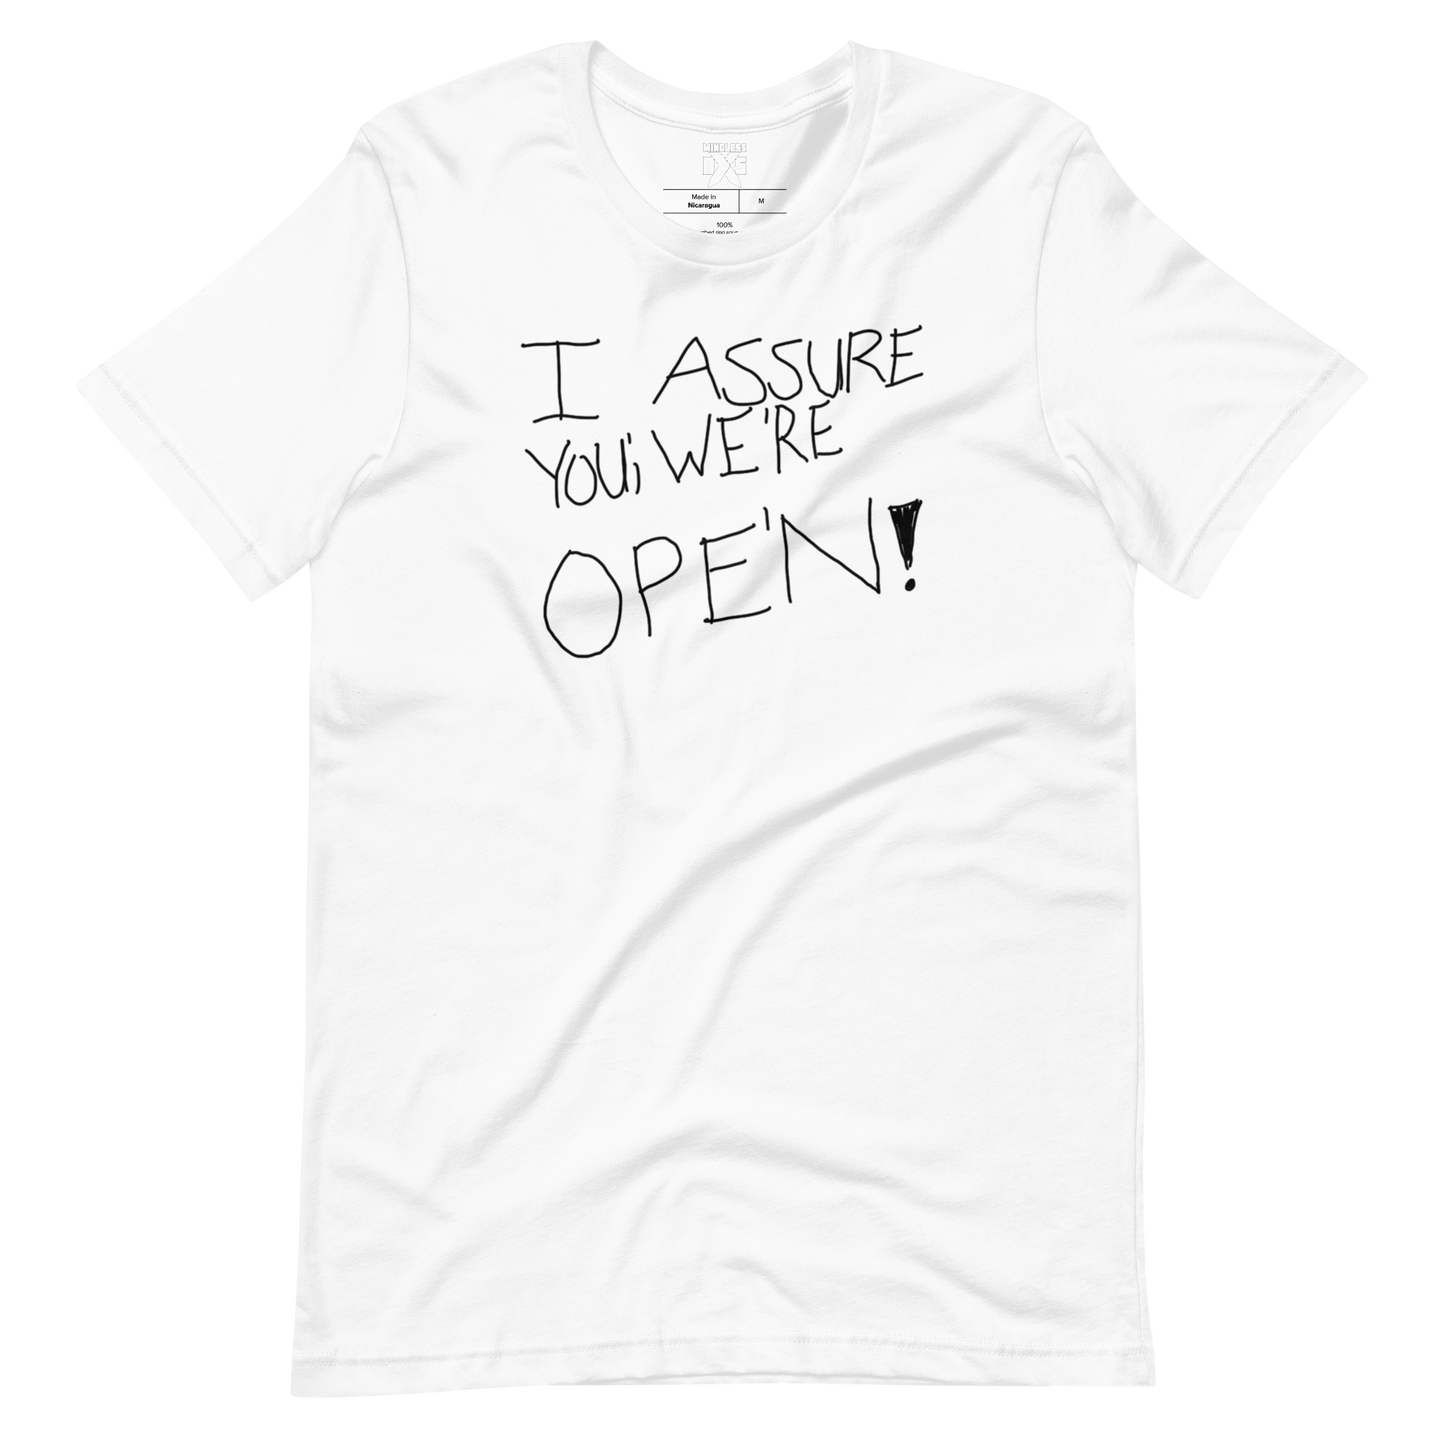 Ope'N Assured Unisex T-Shirt